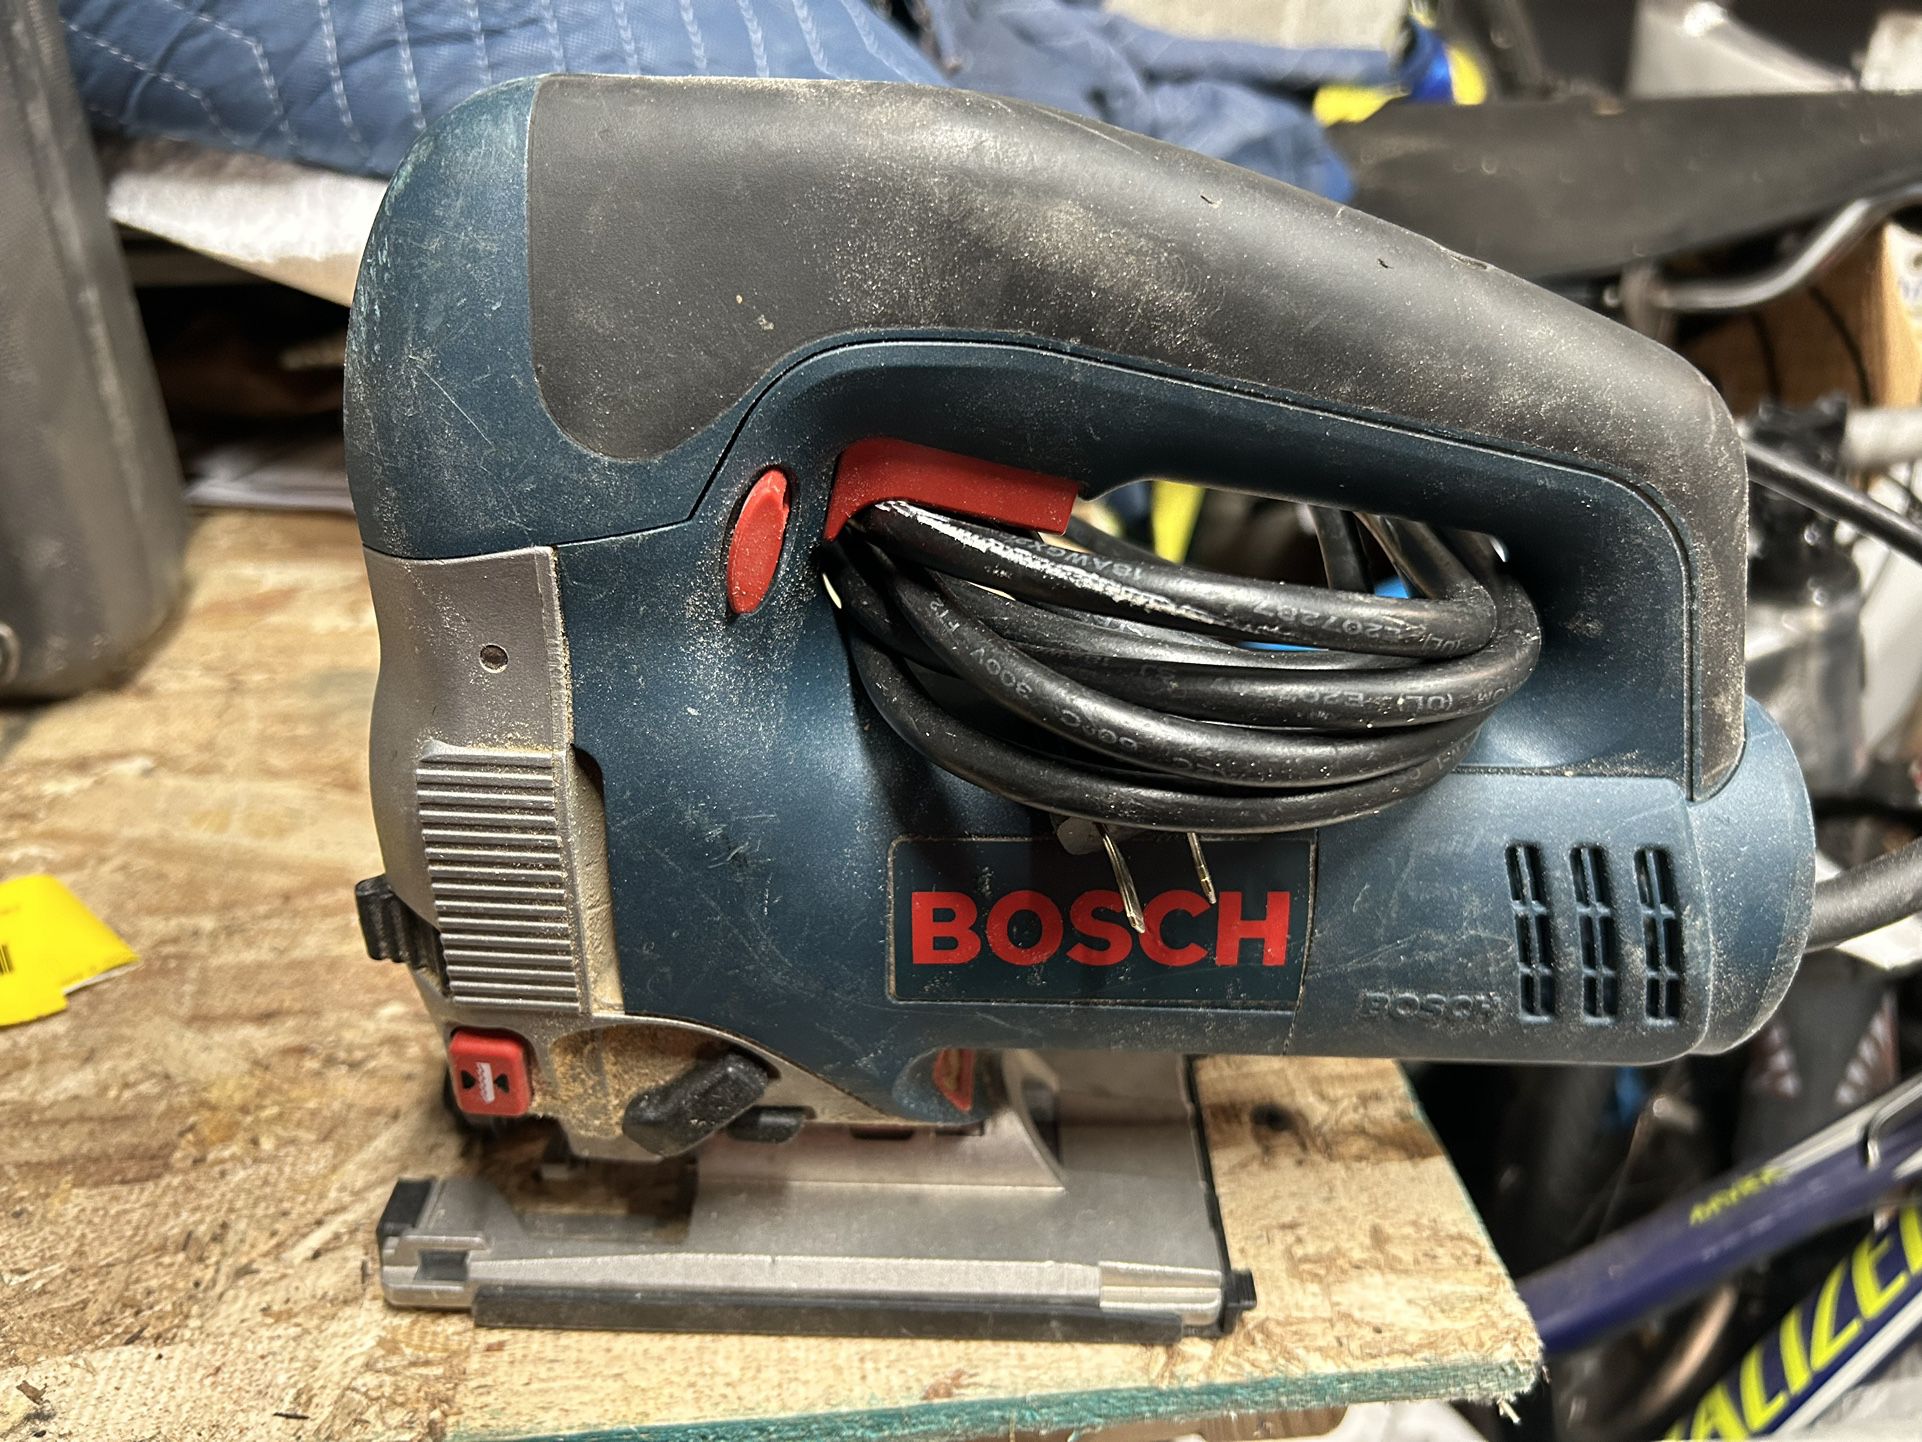 Bosch Corded Jigsaw